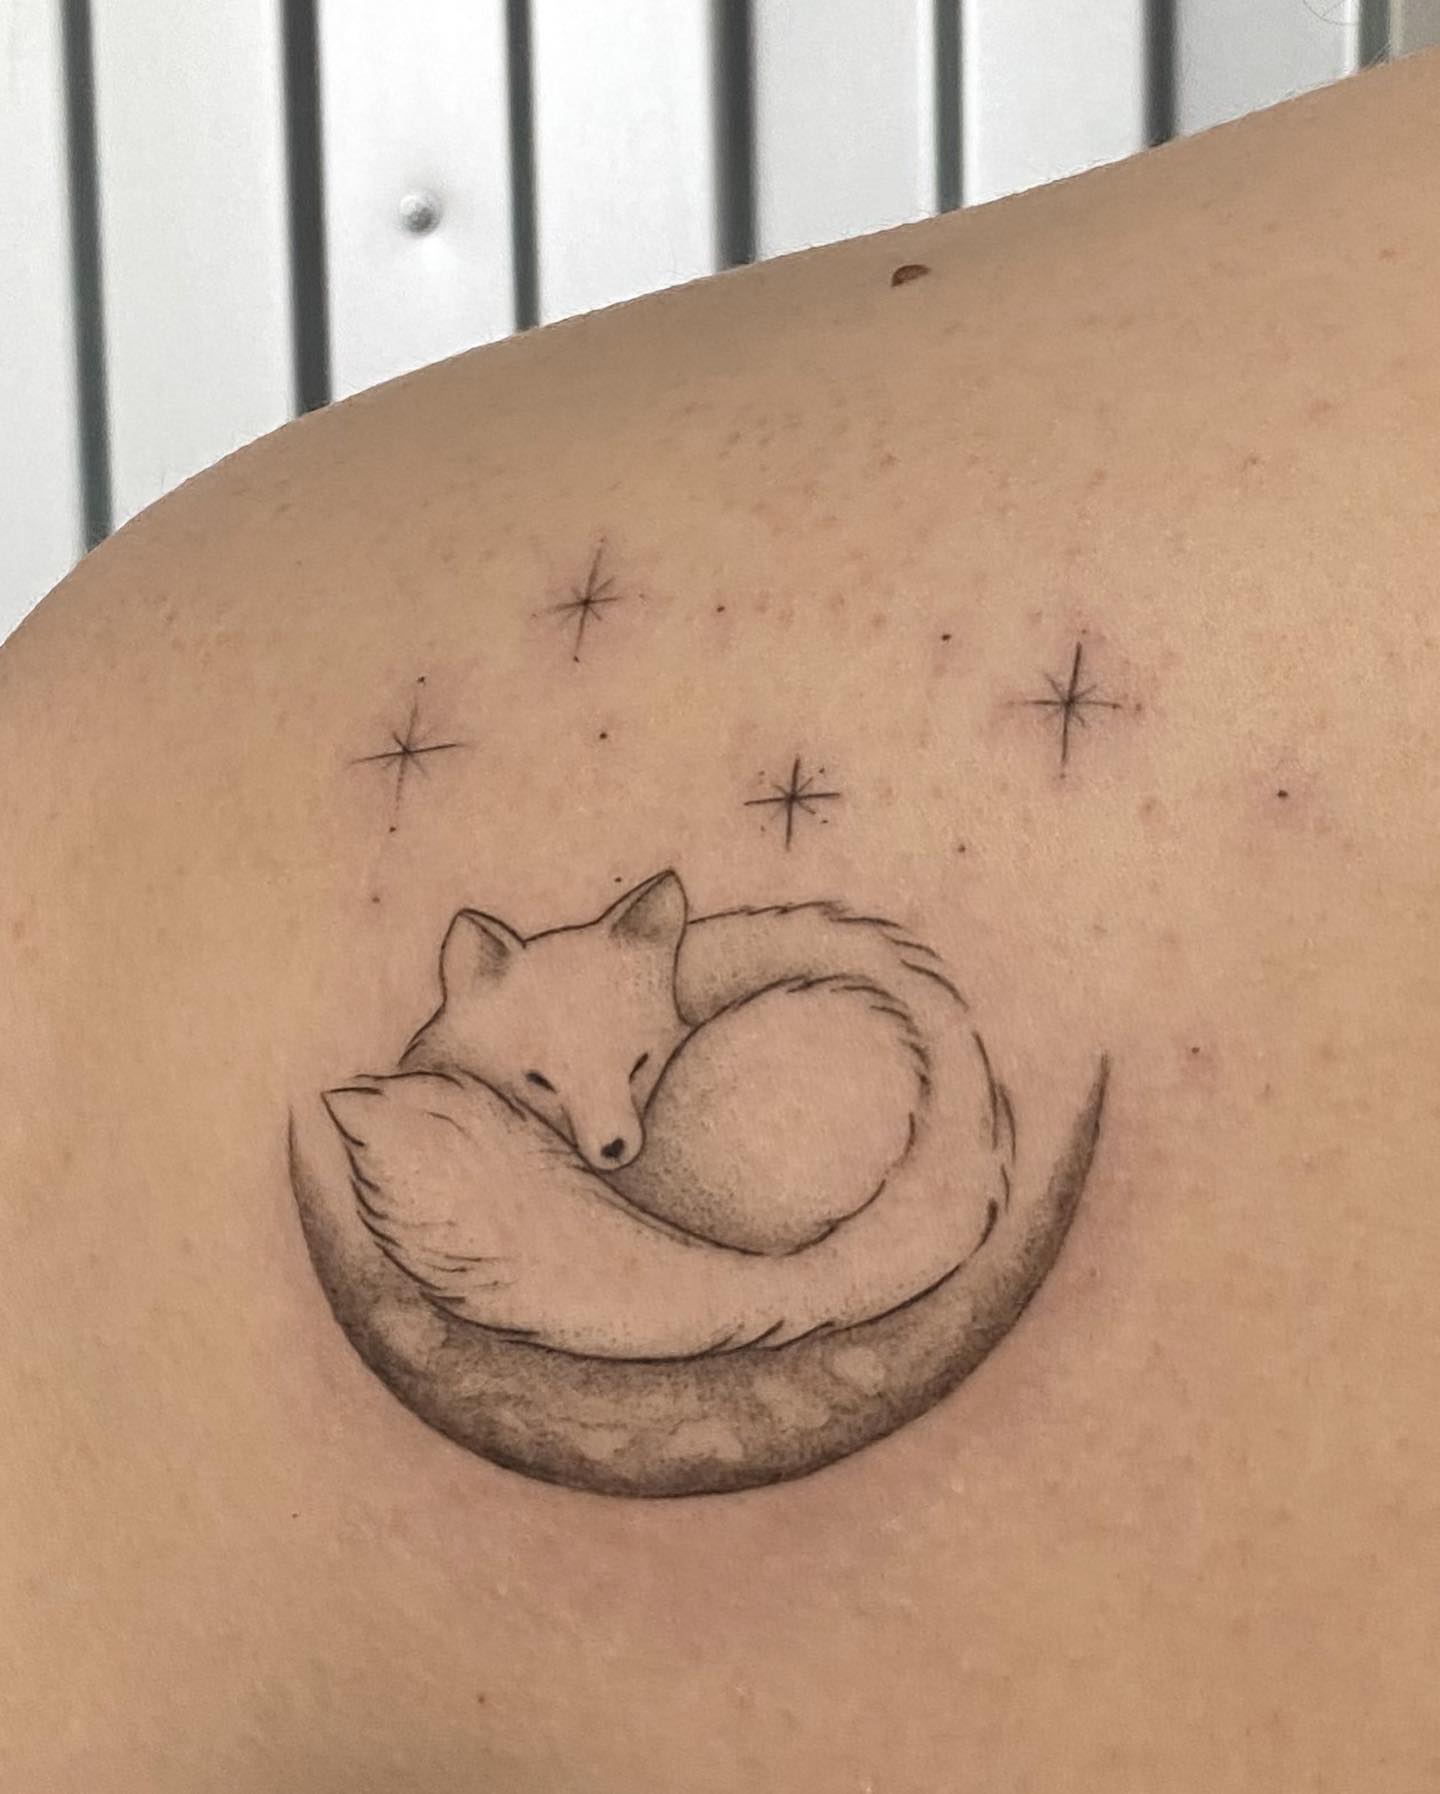 The Curled Fox Tattoo 2